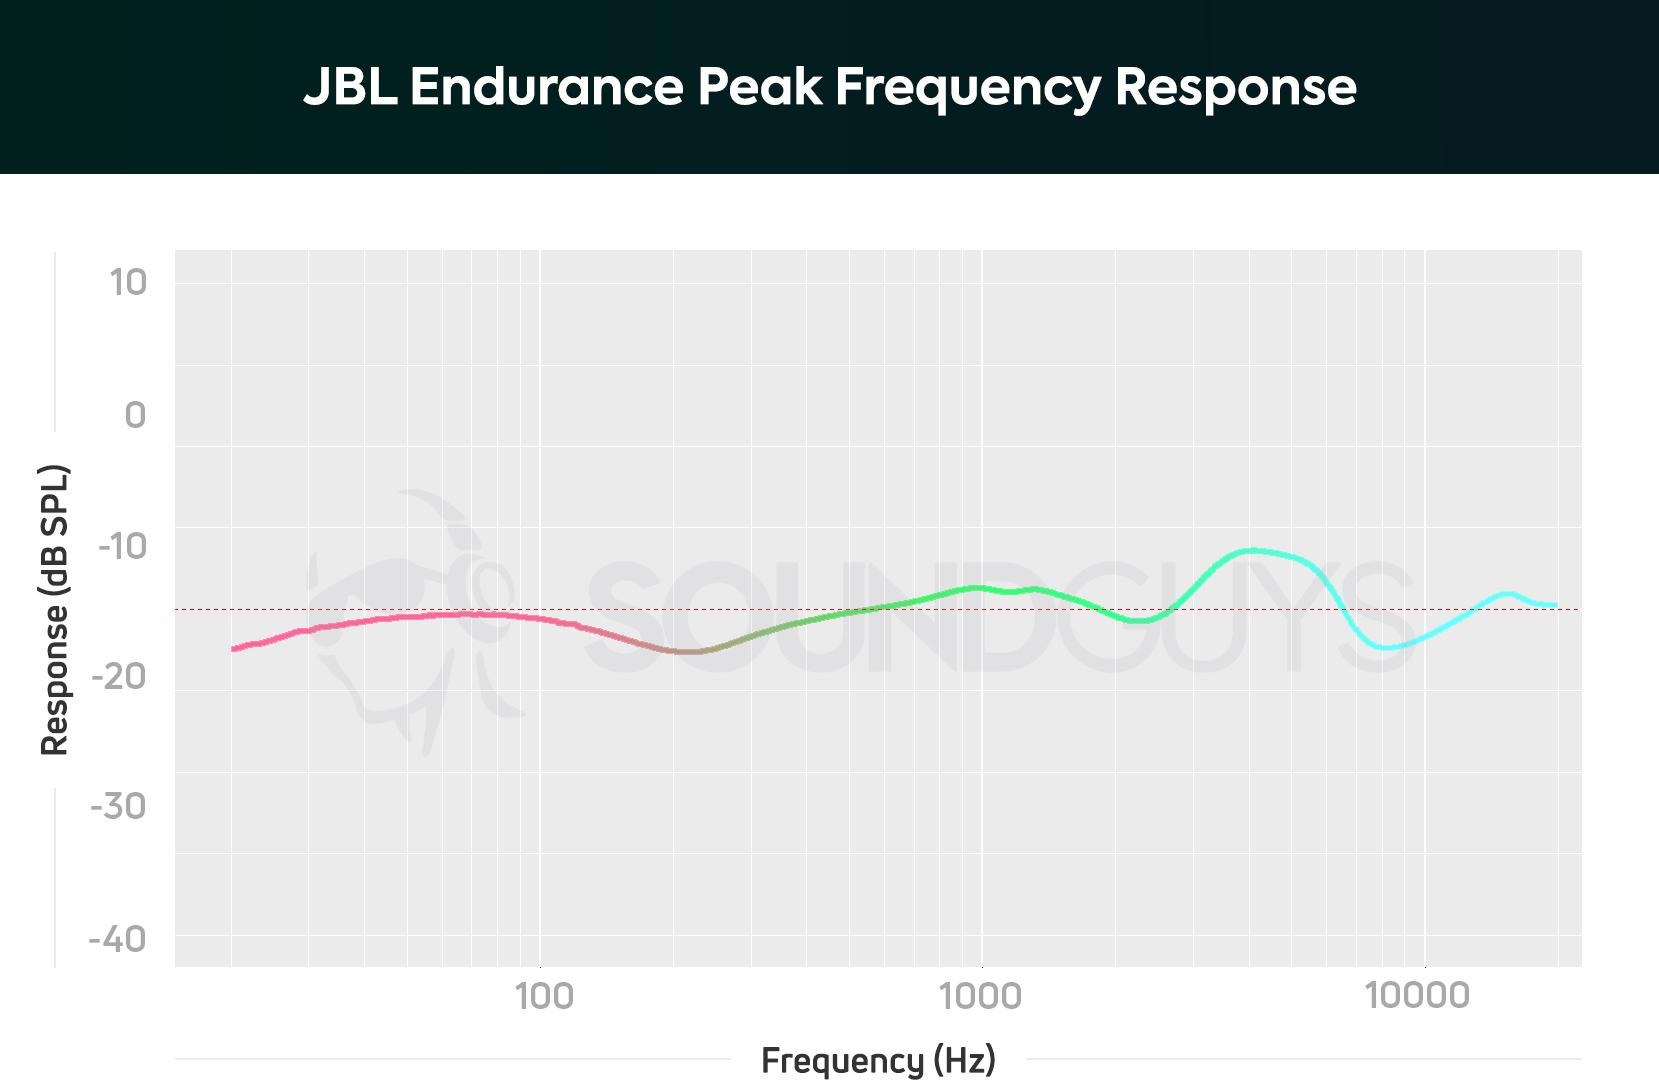 JBL Endurance Peak frequency response chart.